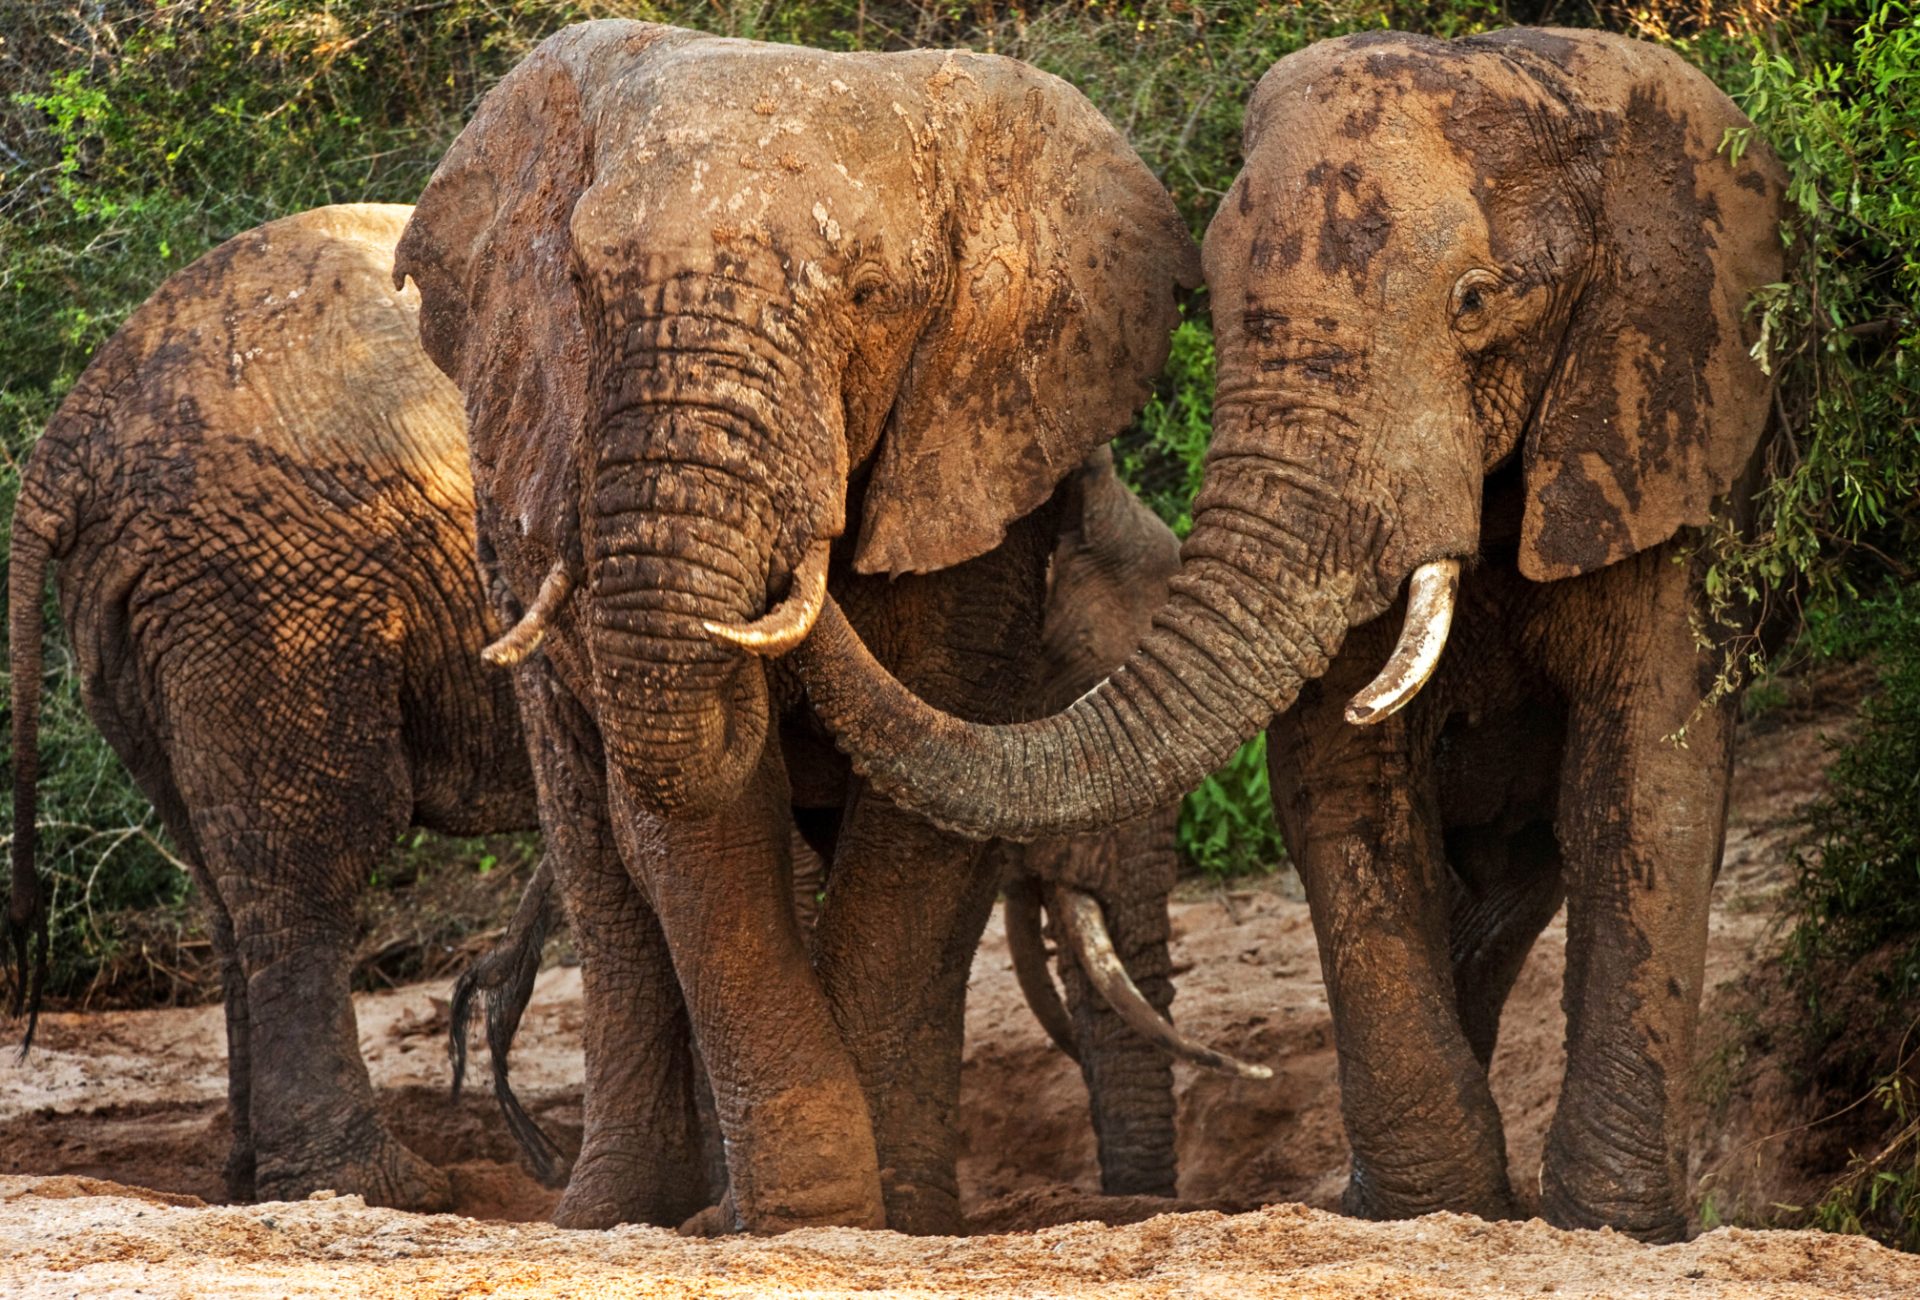 Elephants drinking from wells